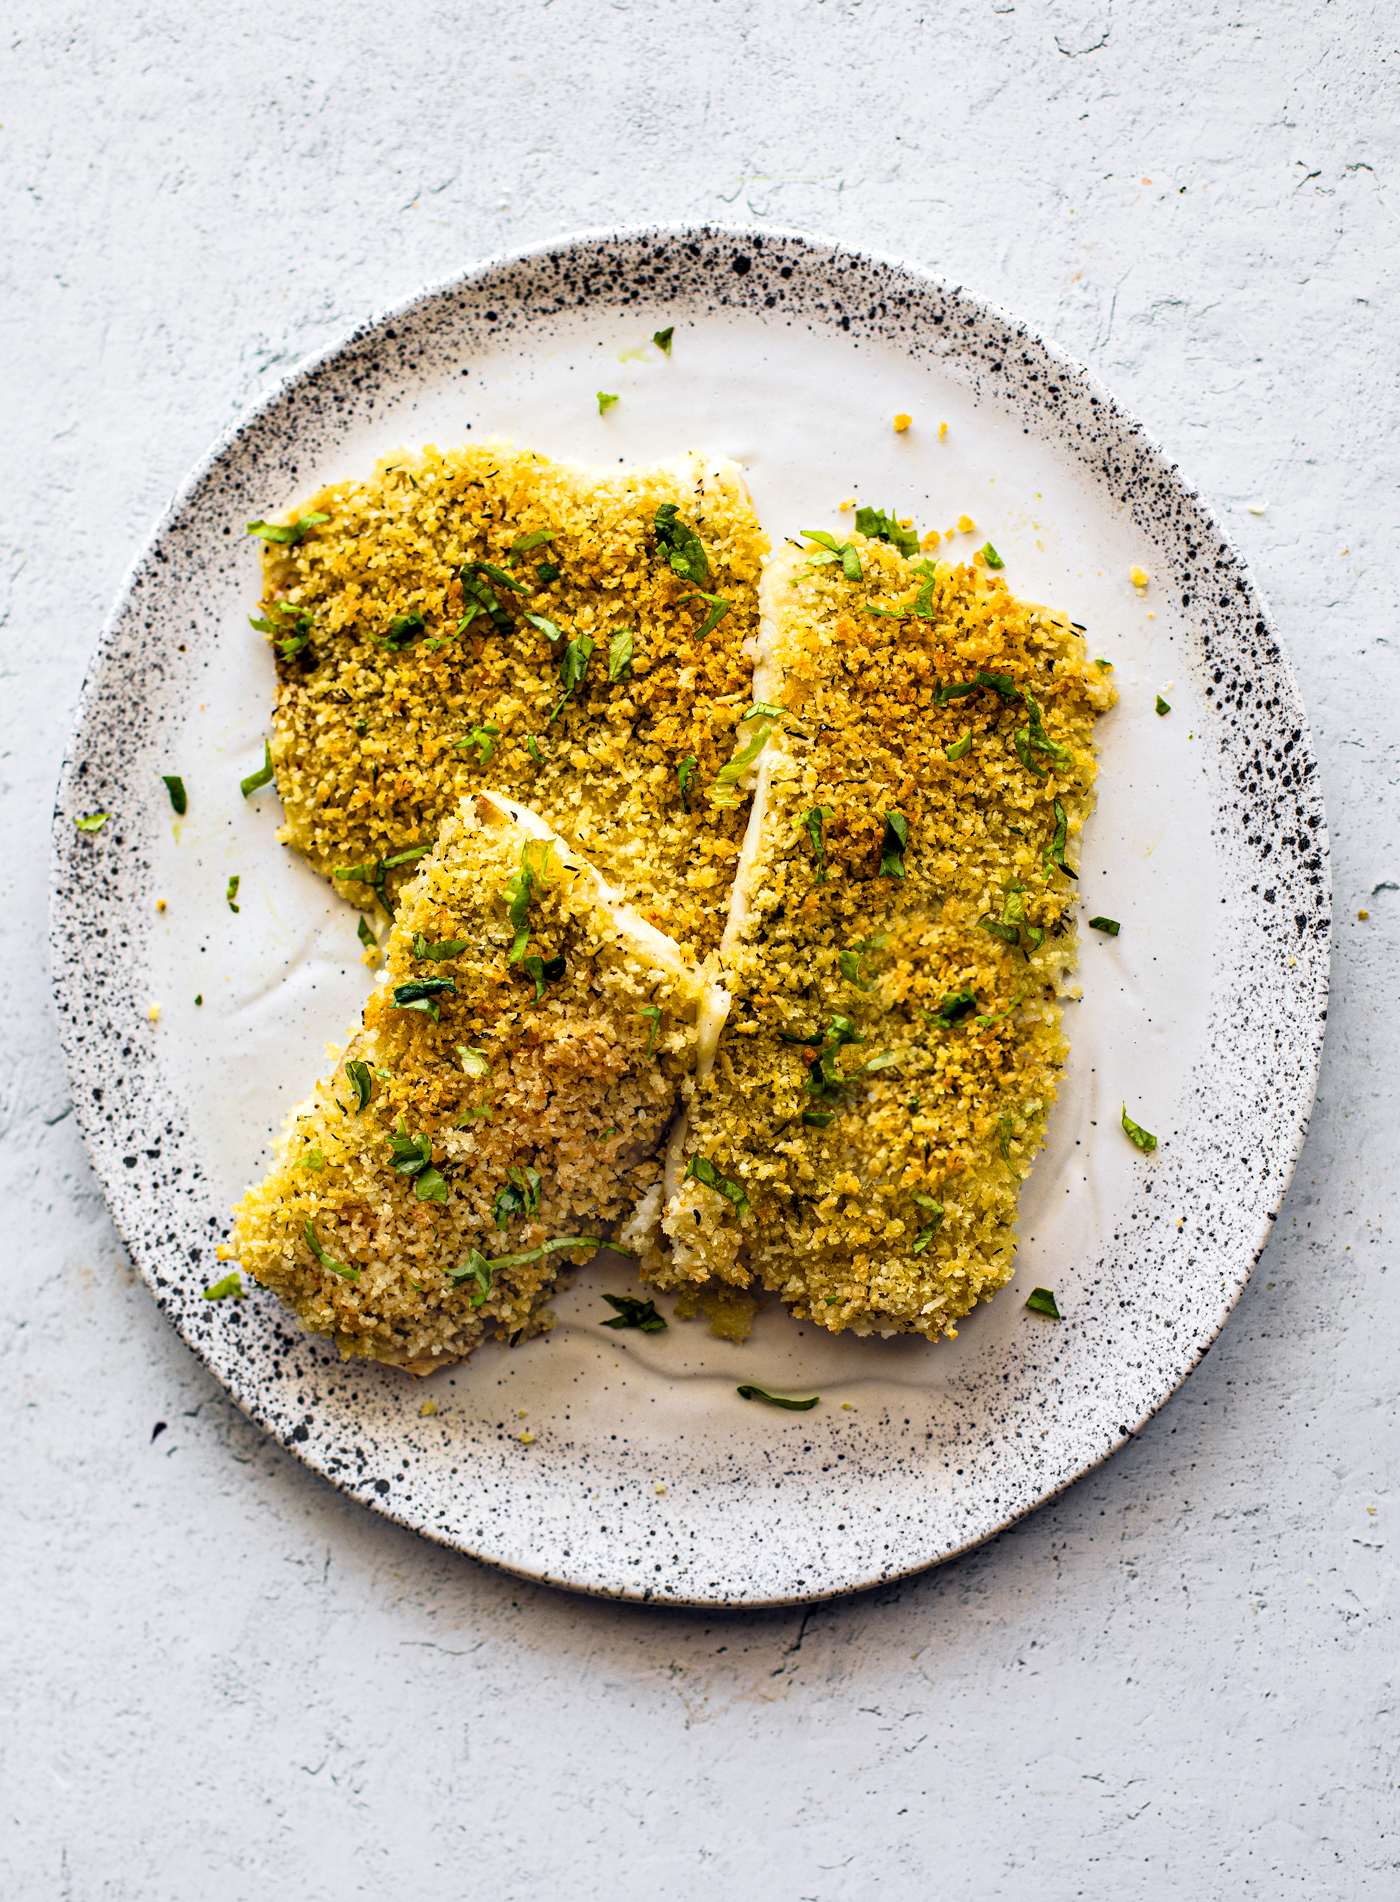 Crispy golden baked flounder on a white speckled serving plate, garnished with fresh parsley.